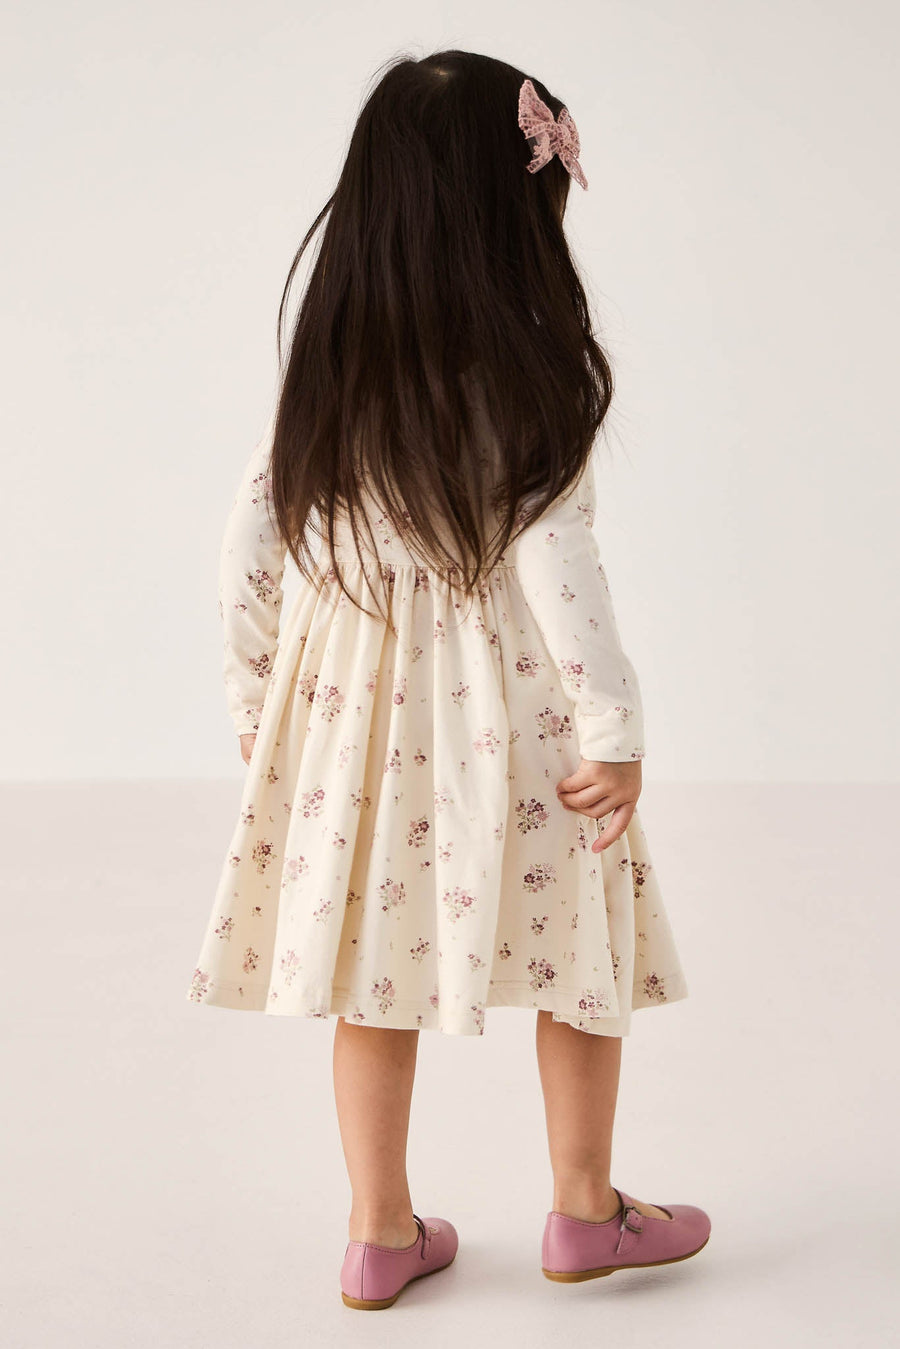 Organic Cotton Tallulah Dress - Lauren Floral Tofu Childrens Dress from Jamie Kay USA